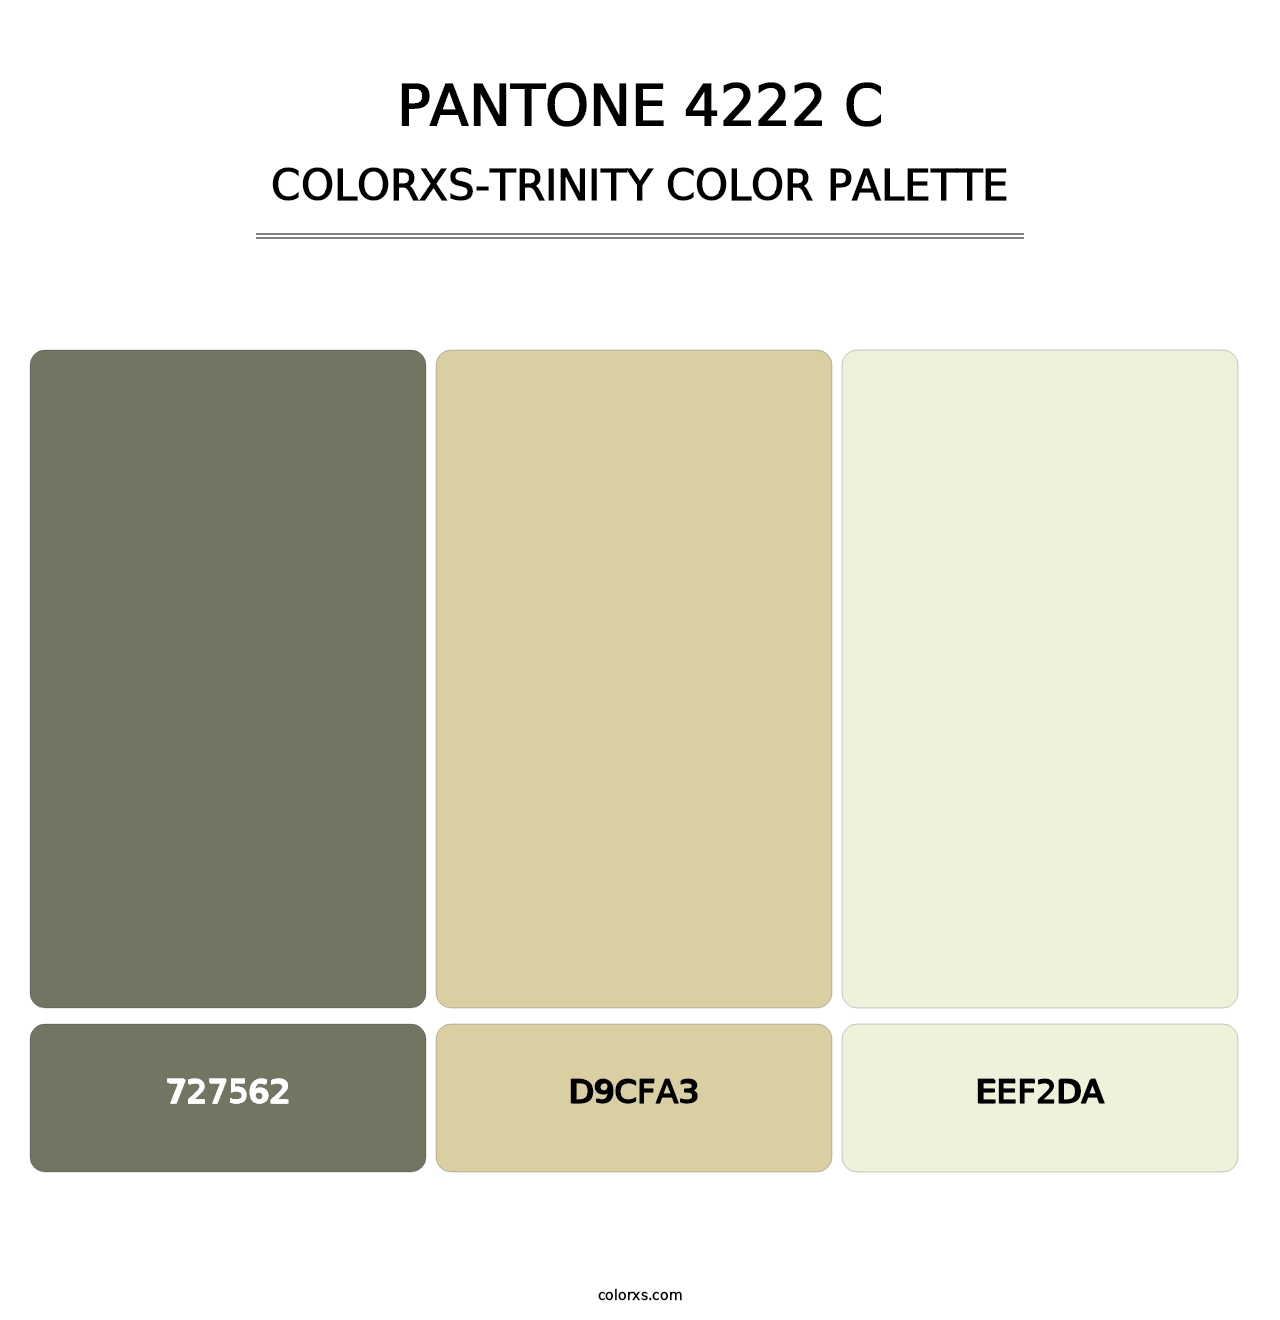 PANTONE 4222 C - Colorxs Trinity Palette